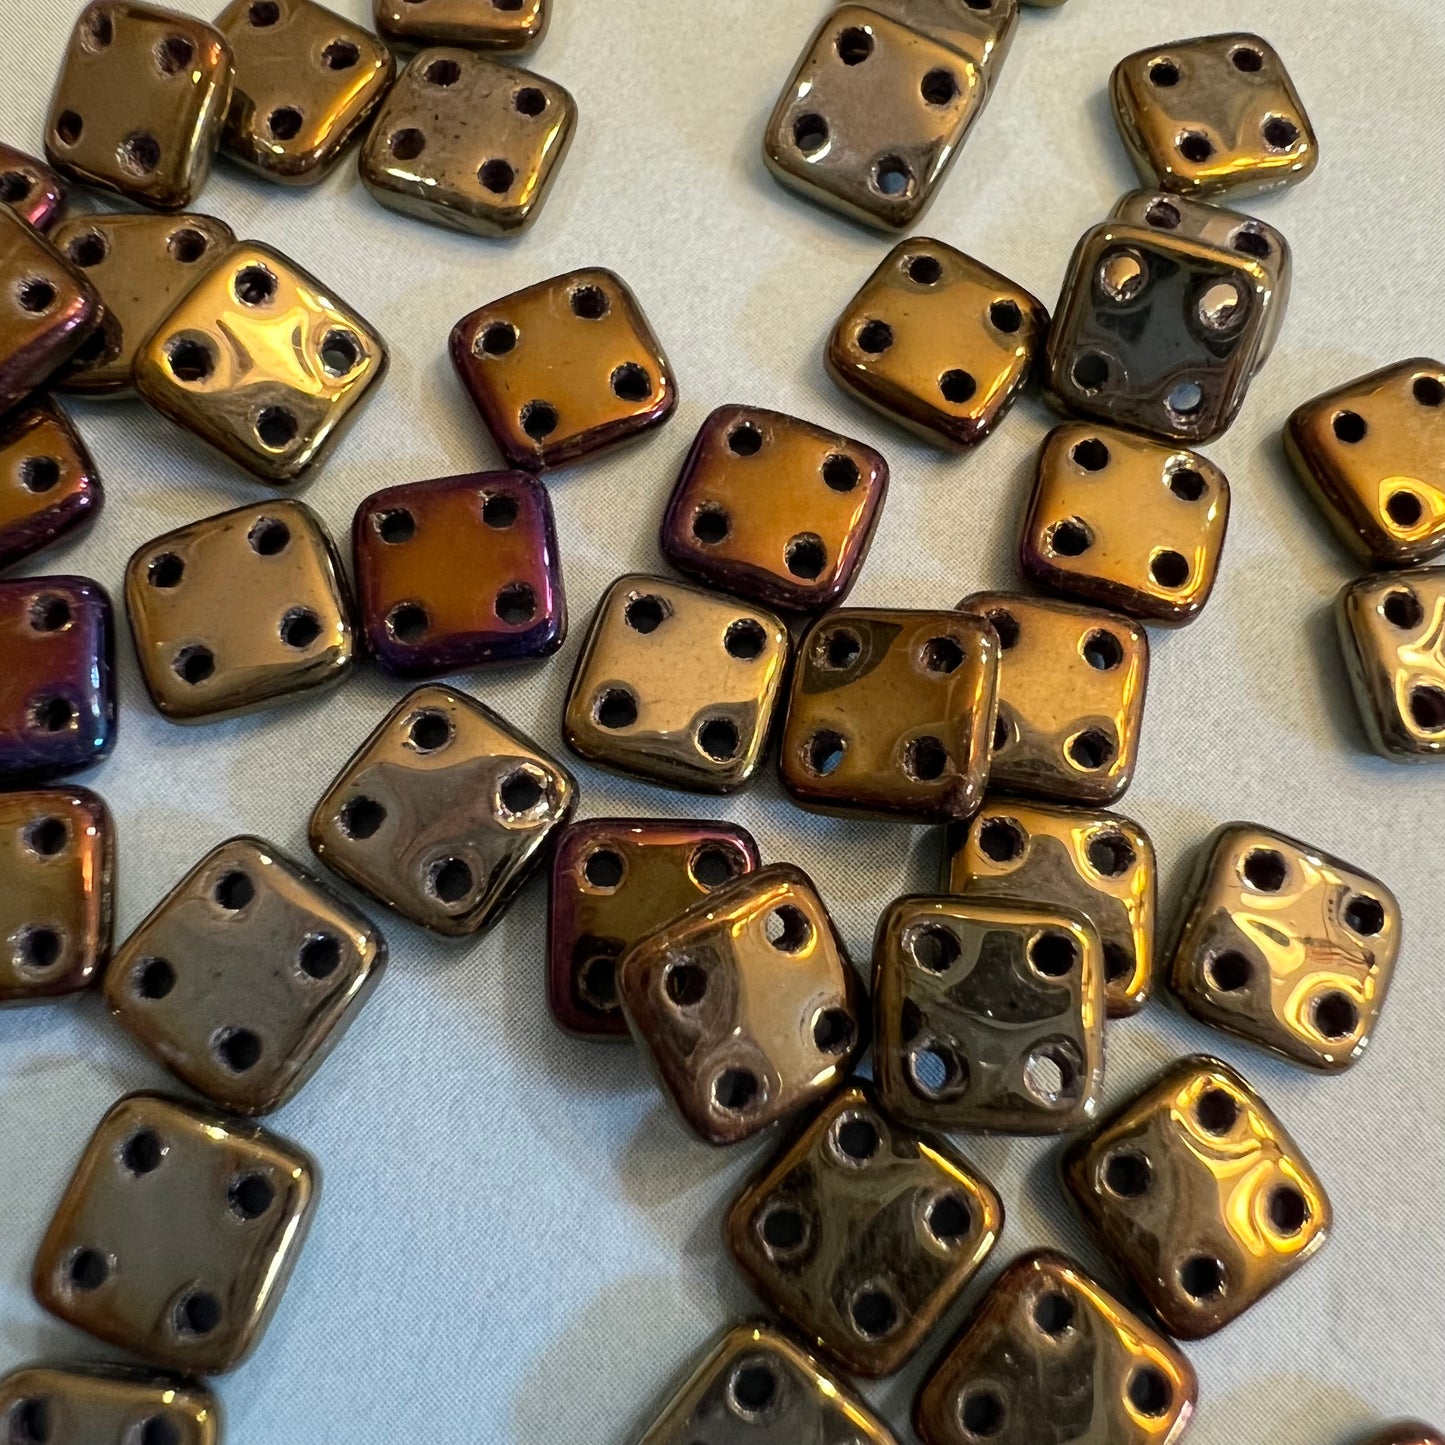 Quadratile 4 Hole Beads (50 pack) - choose color